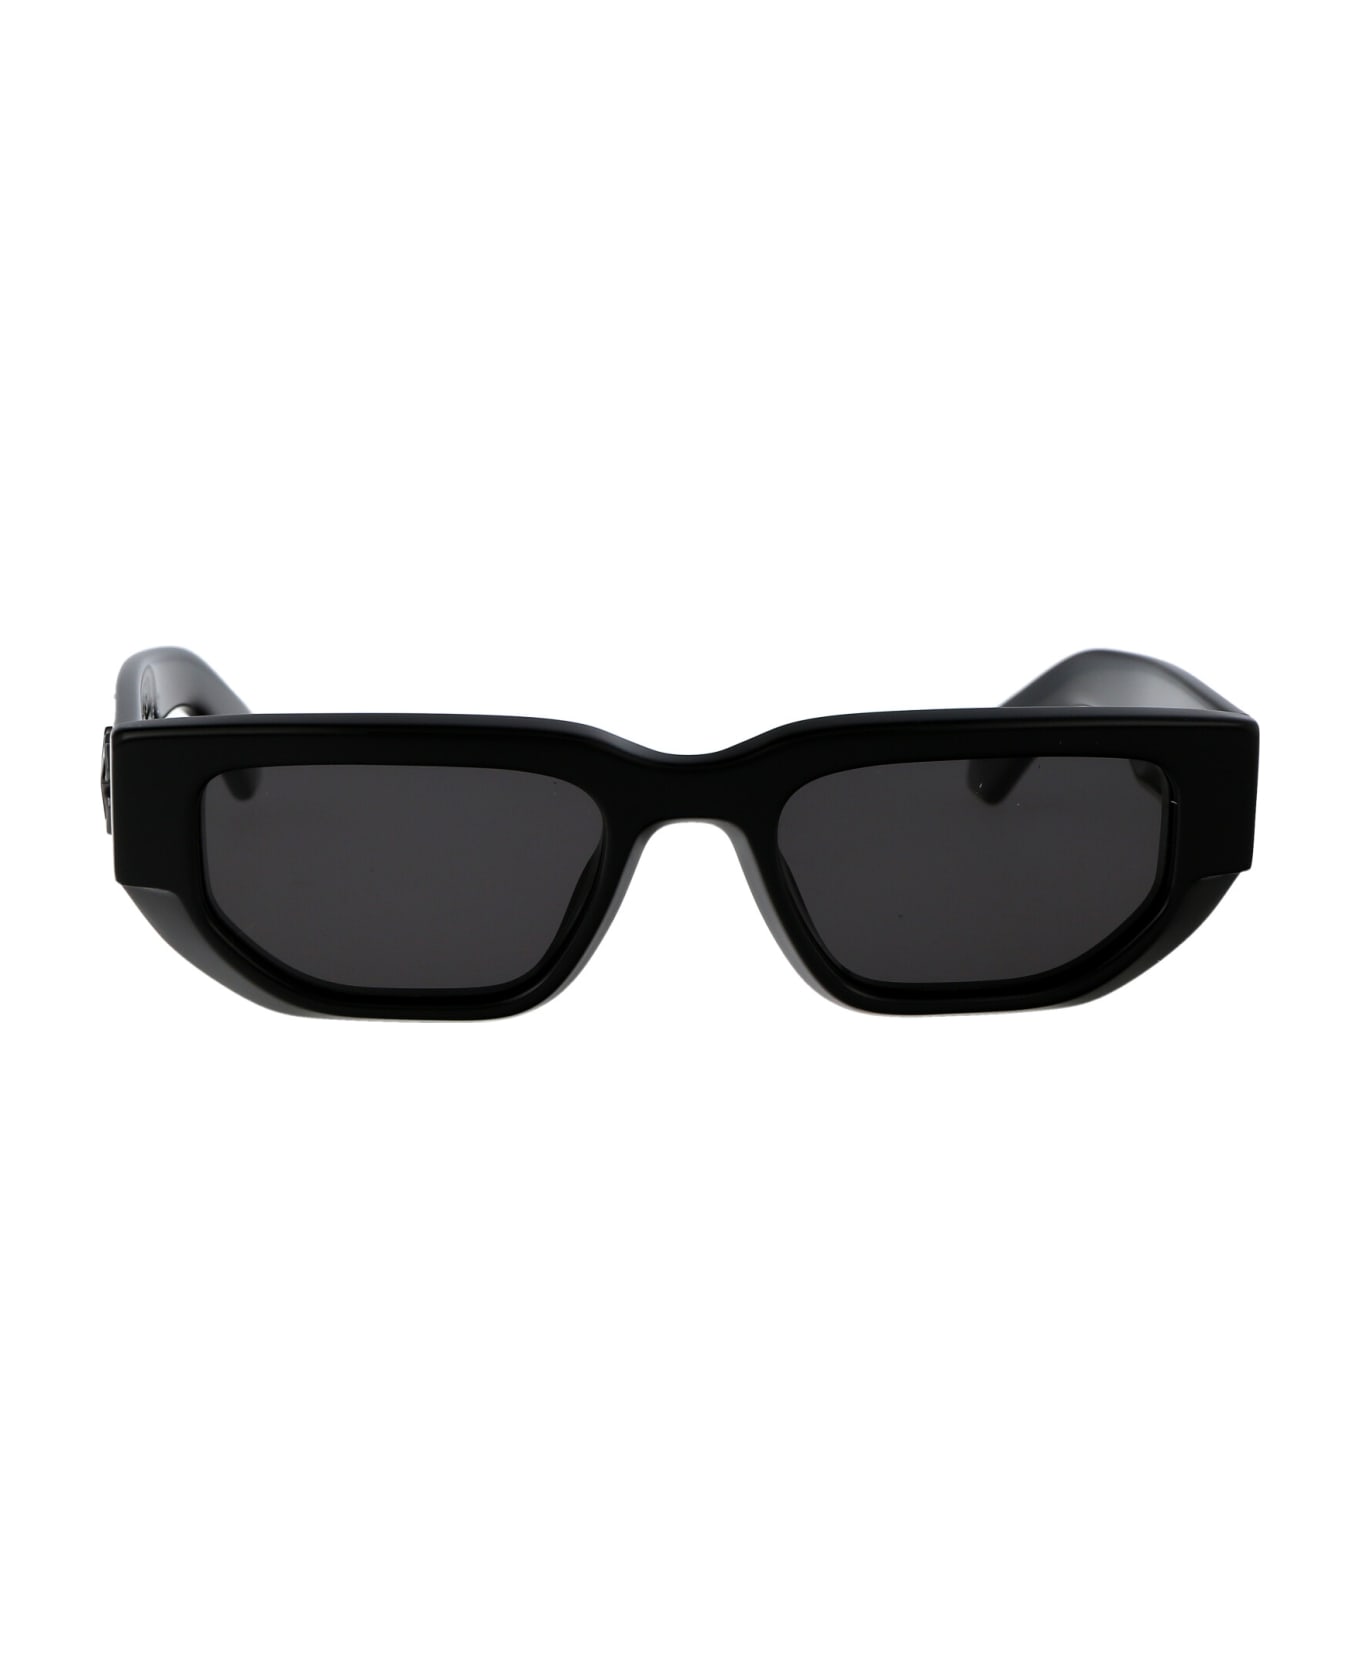 Off-White Greeley Sunglasses - Black